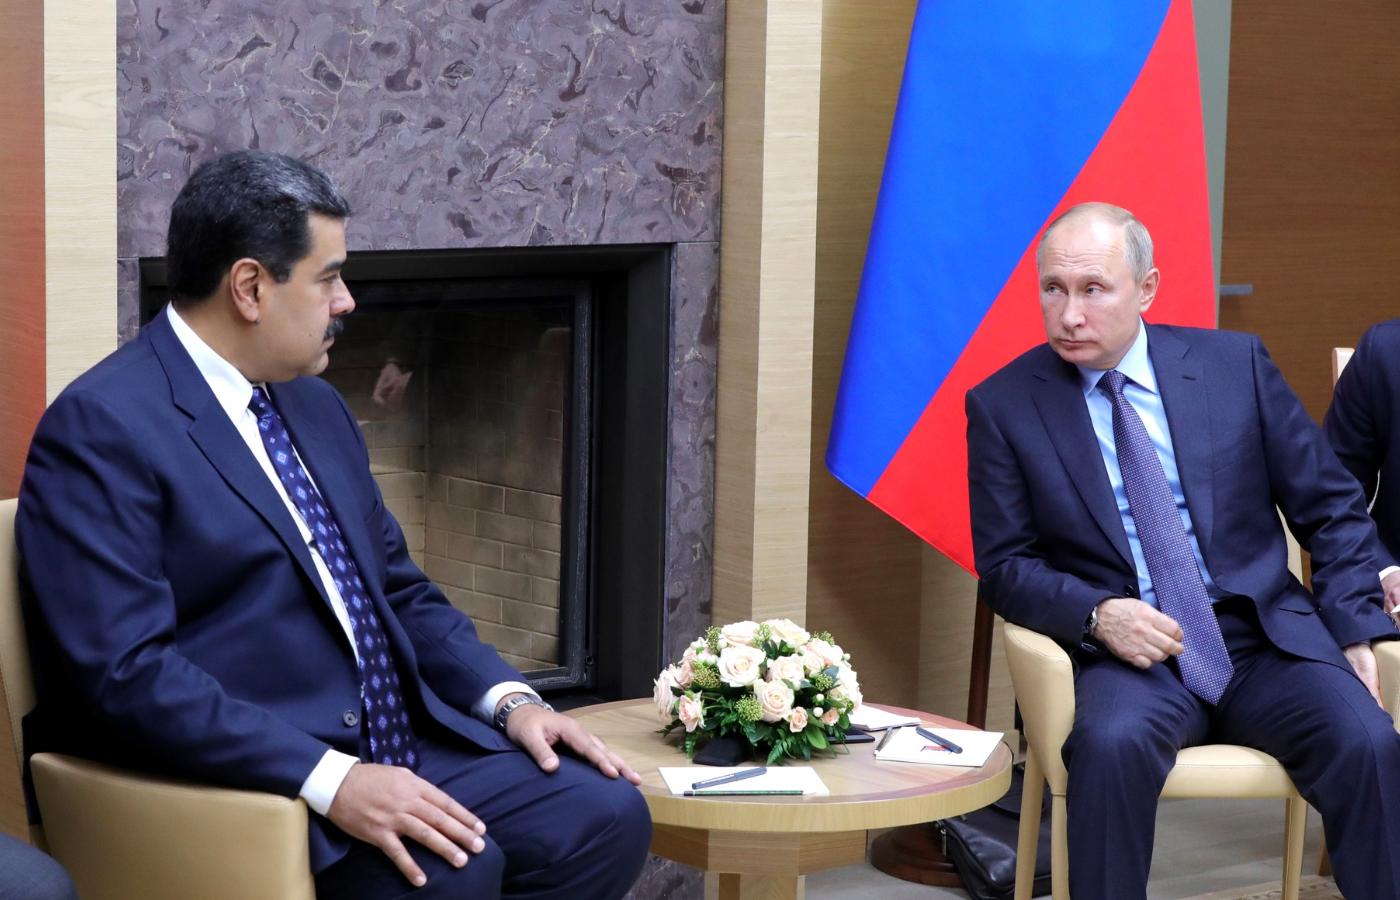 Spotkanie Maduro z Putinem